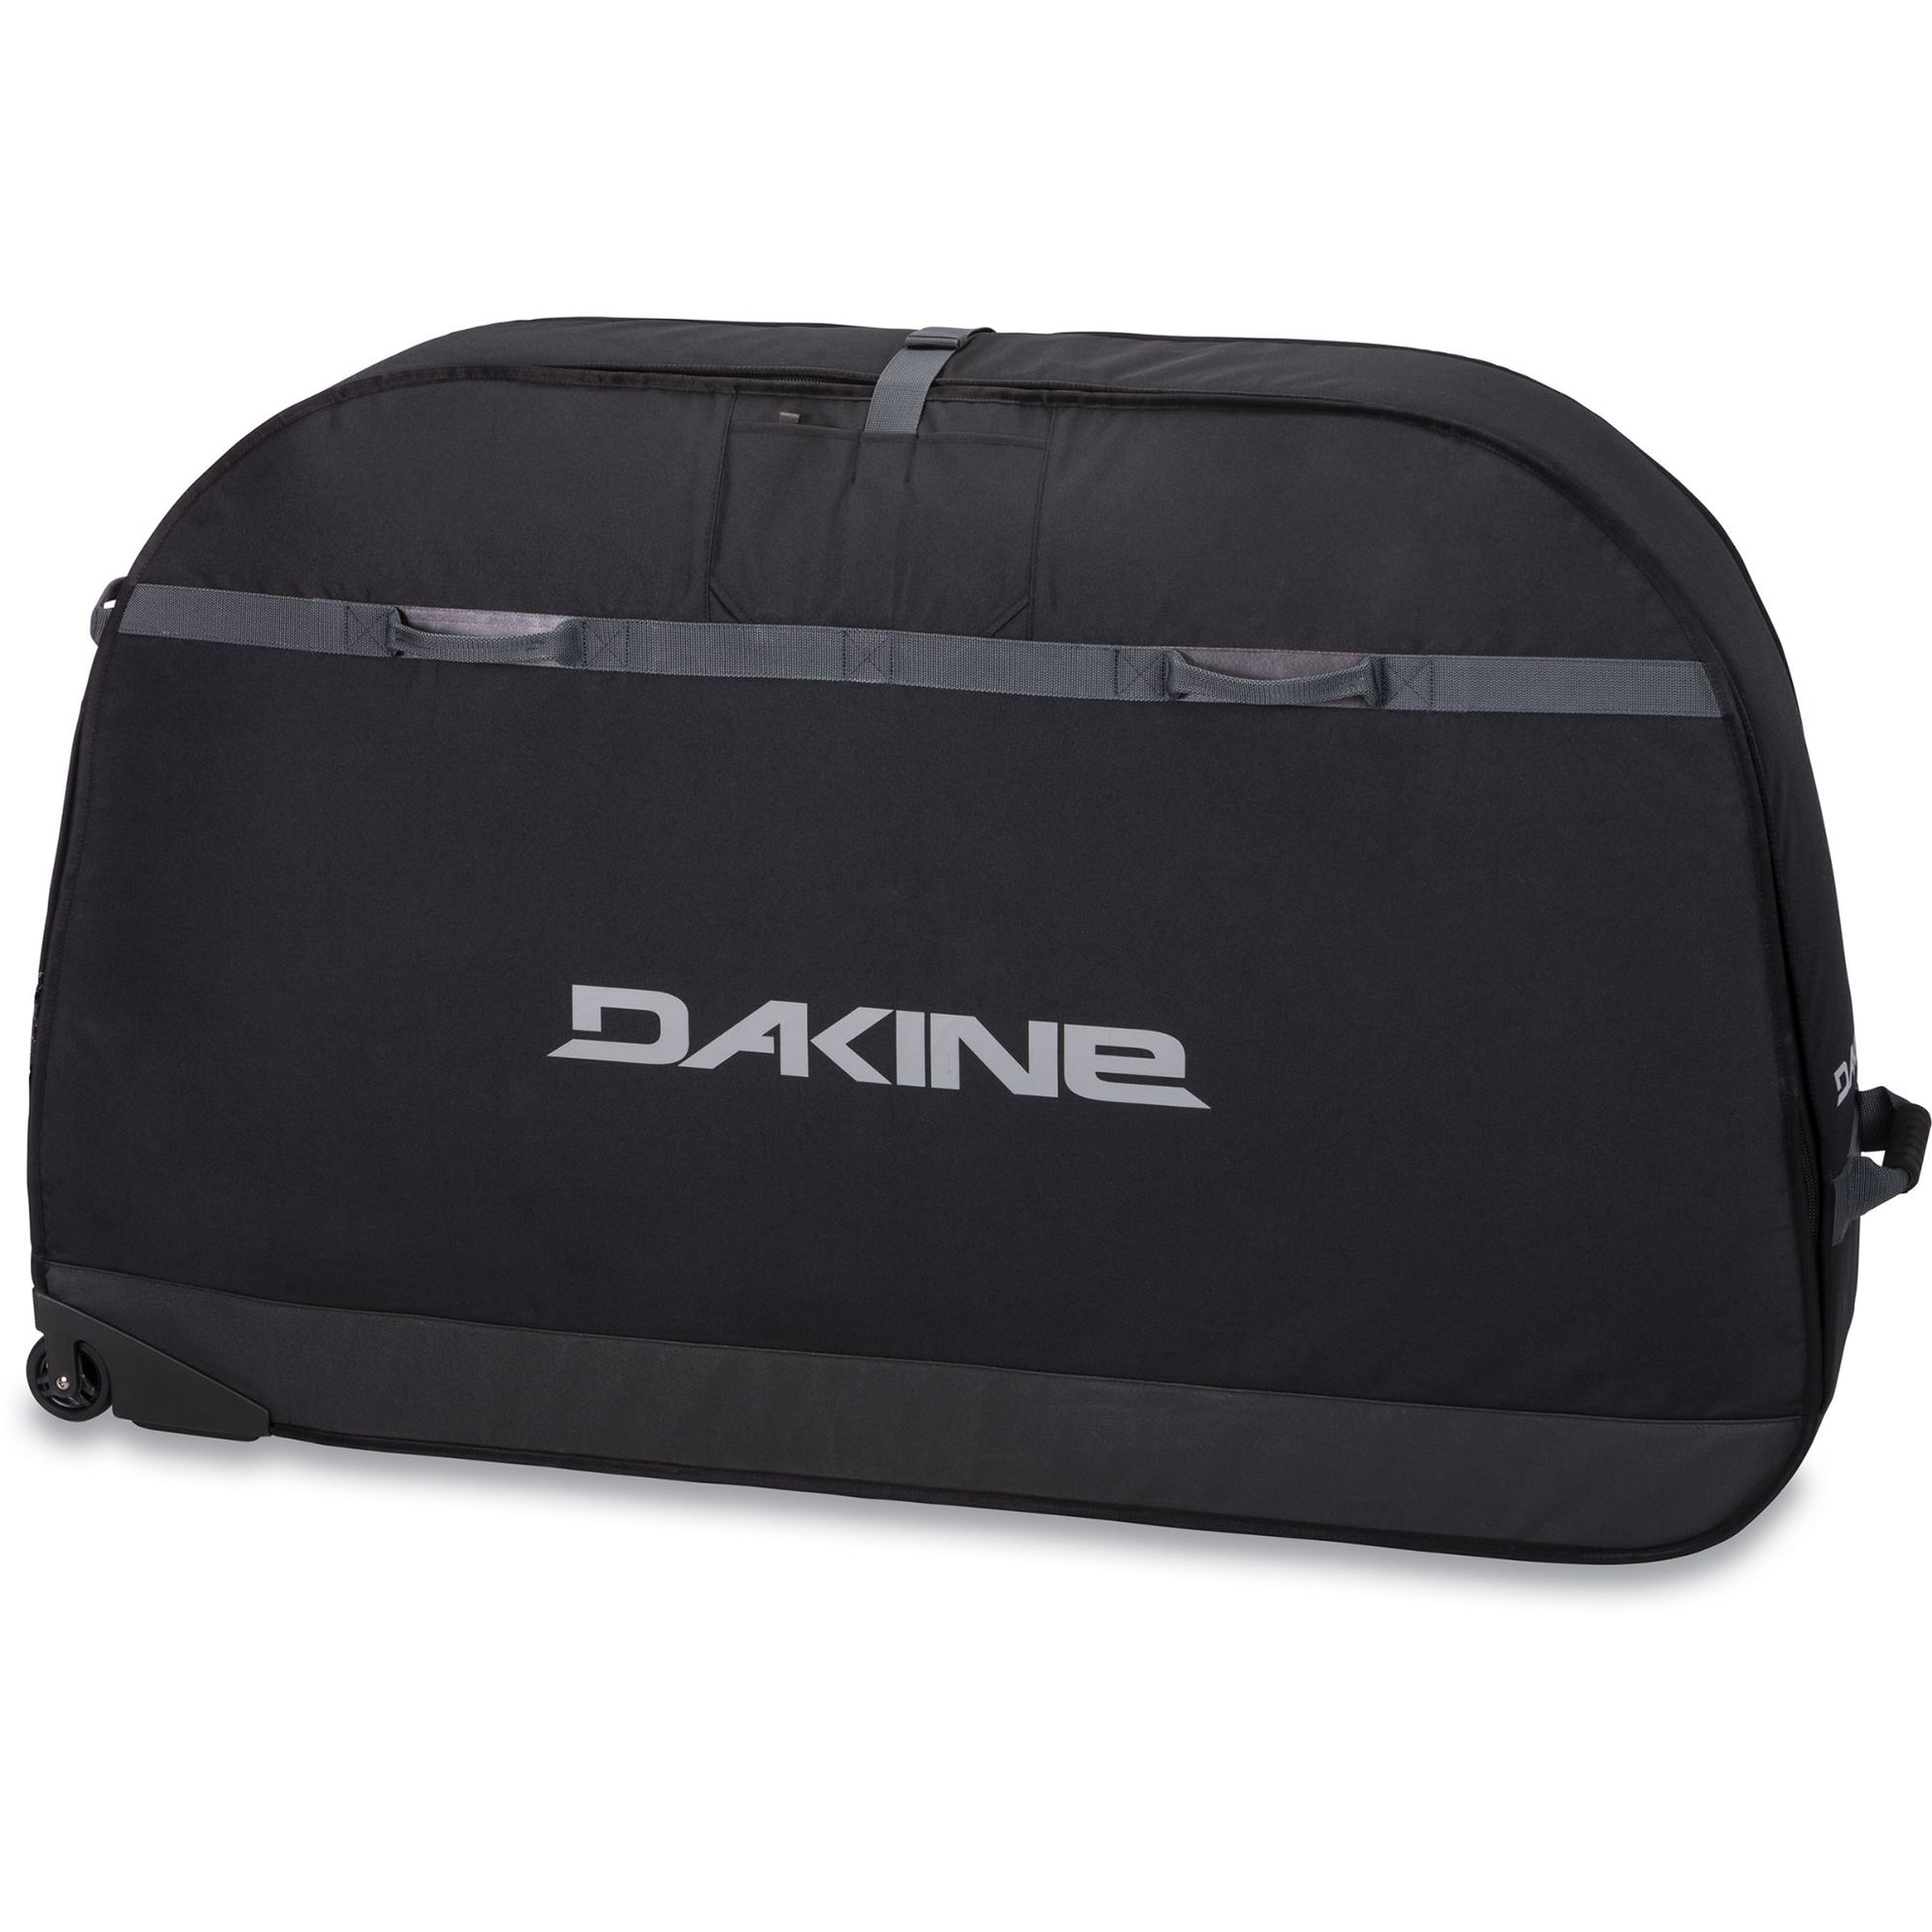 Dakine Bike Roller Bag Black OS Travel Bags